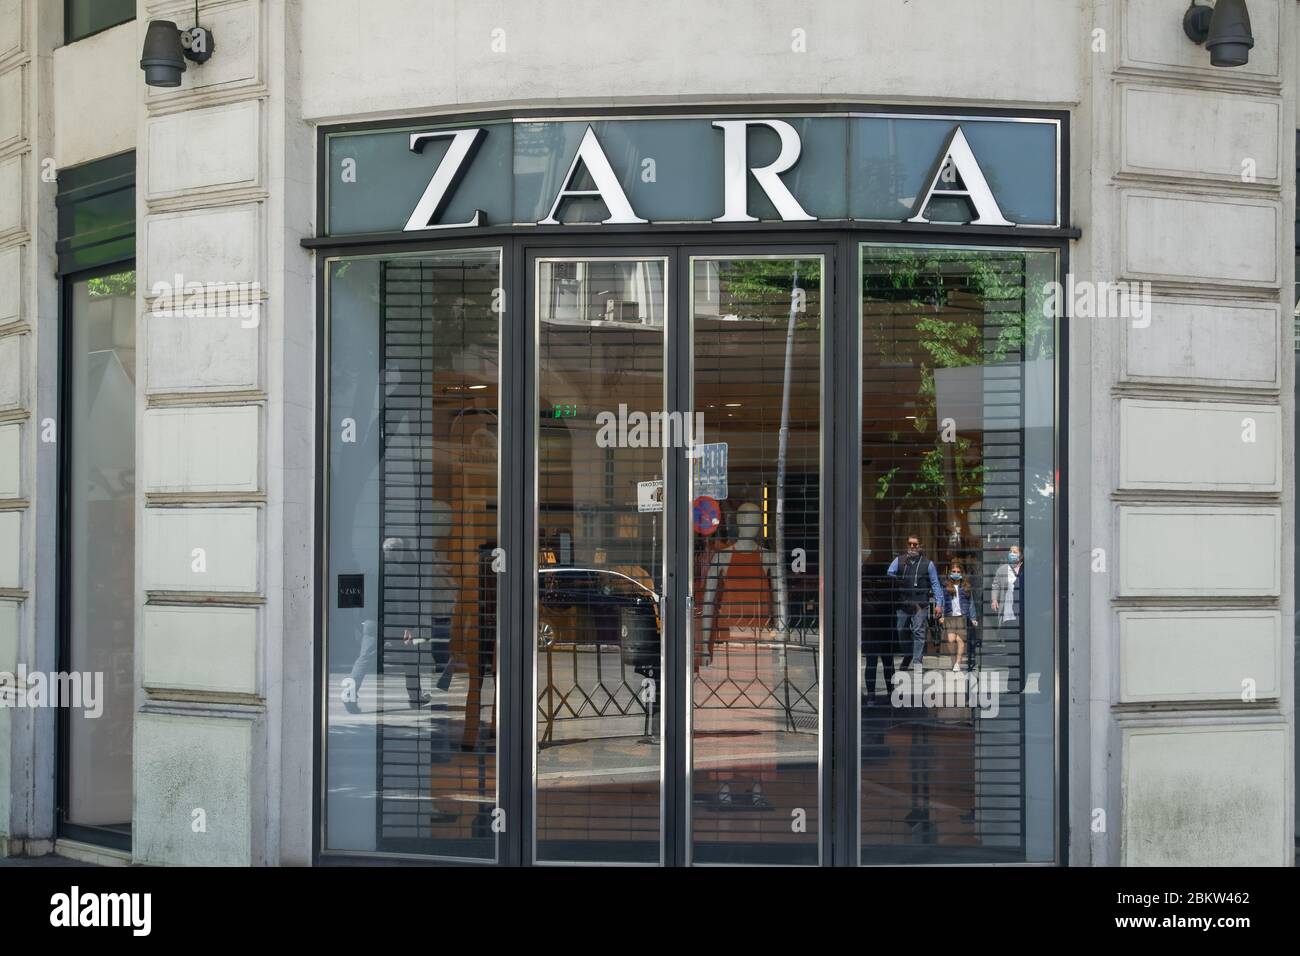 Thessaloniki, Greece Zara clothes brand closed doors facade. Inditex Spanish retailer store entrance with company logo. Stock Photo